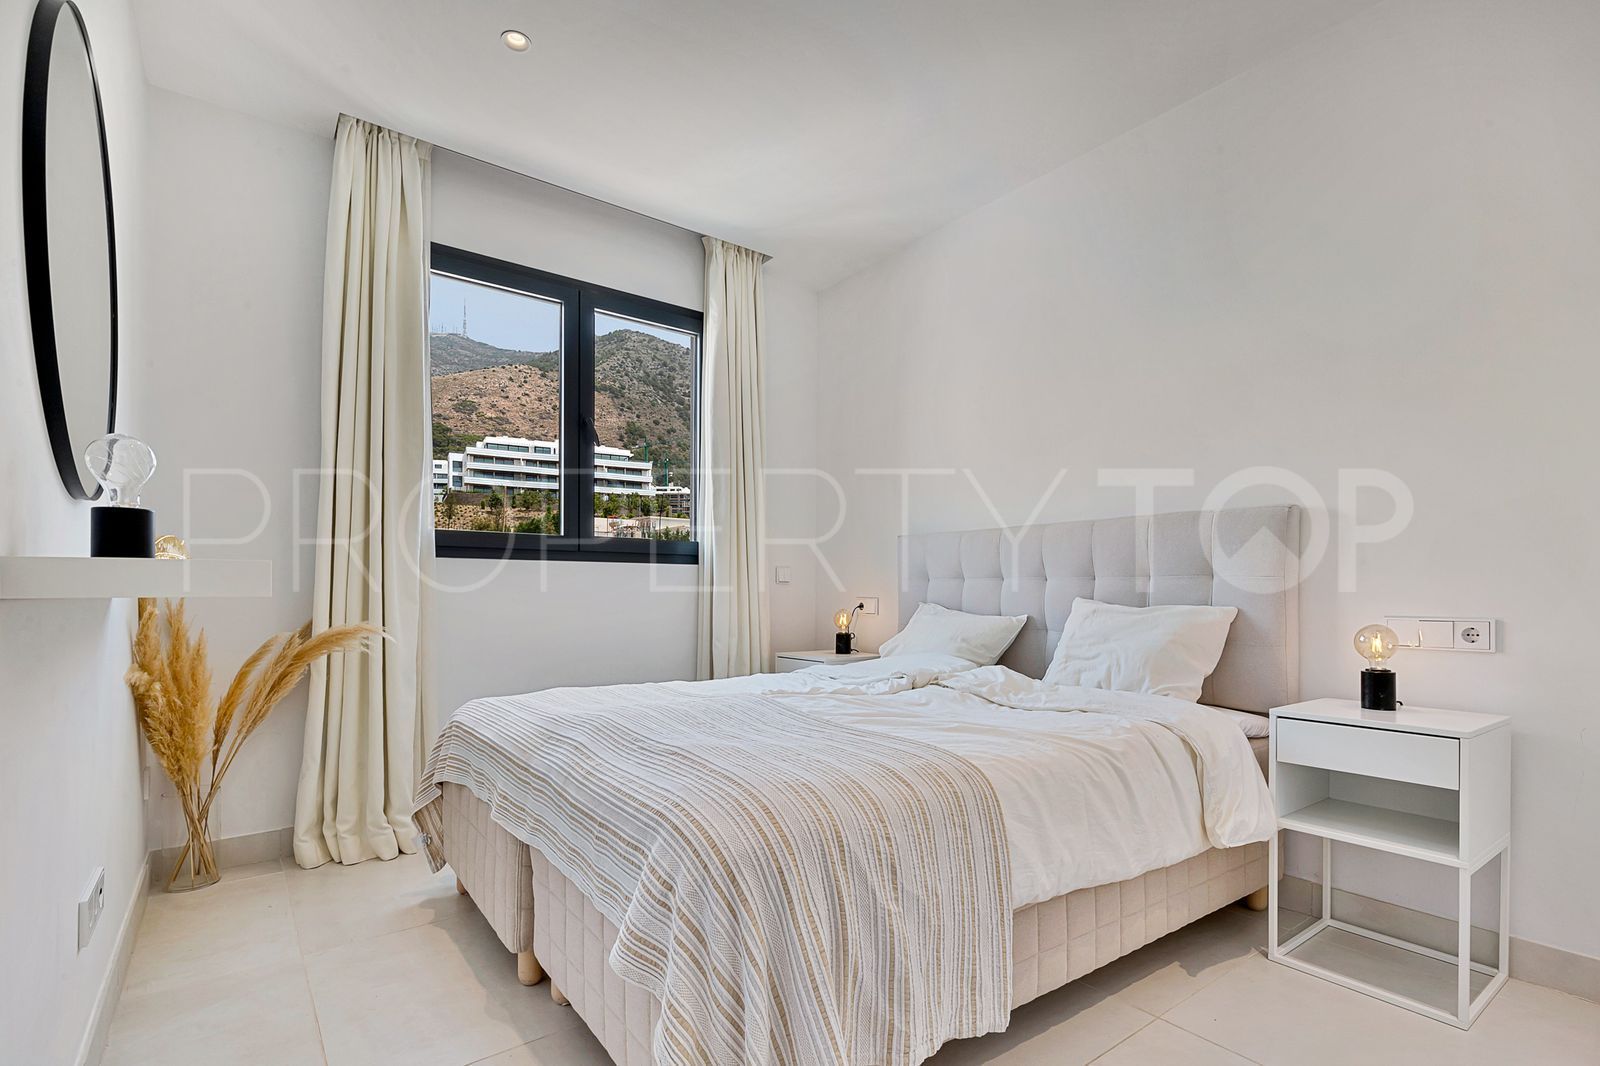 3 bedrooms apartment in El Higueron for sale